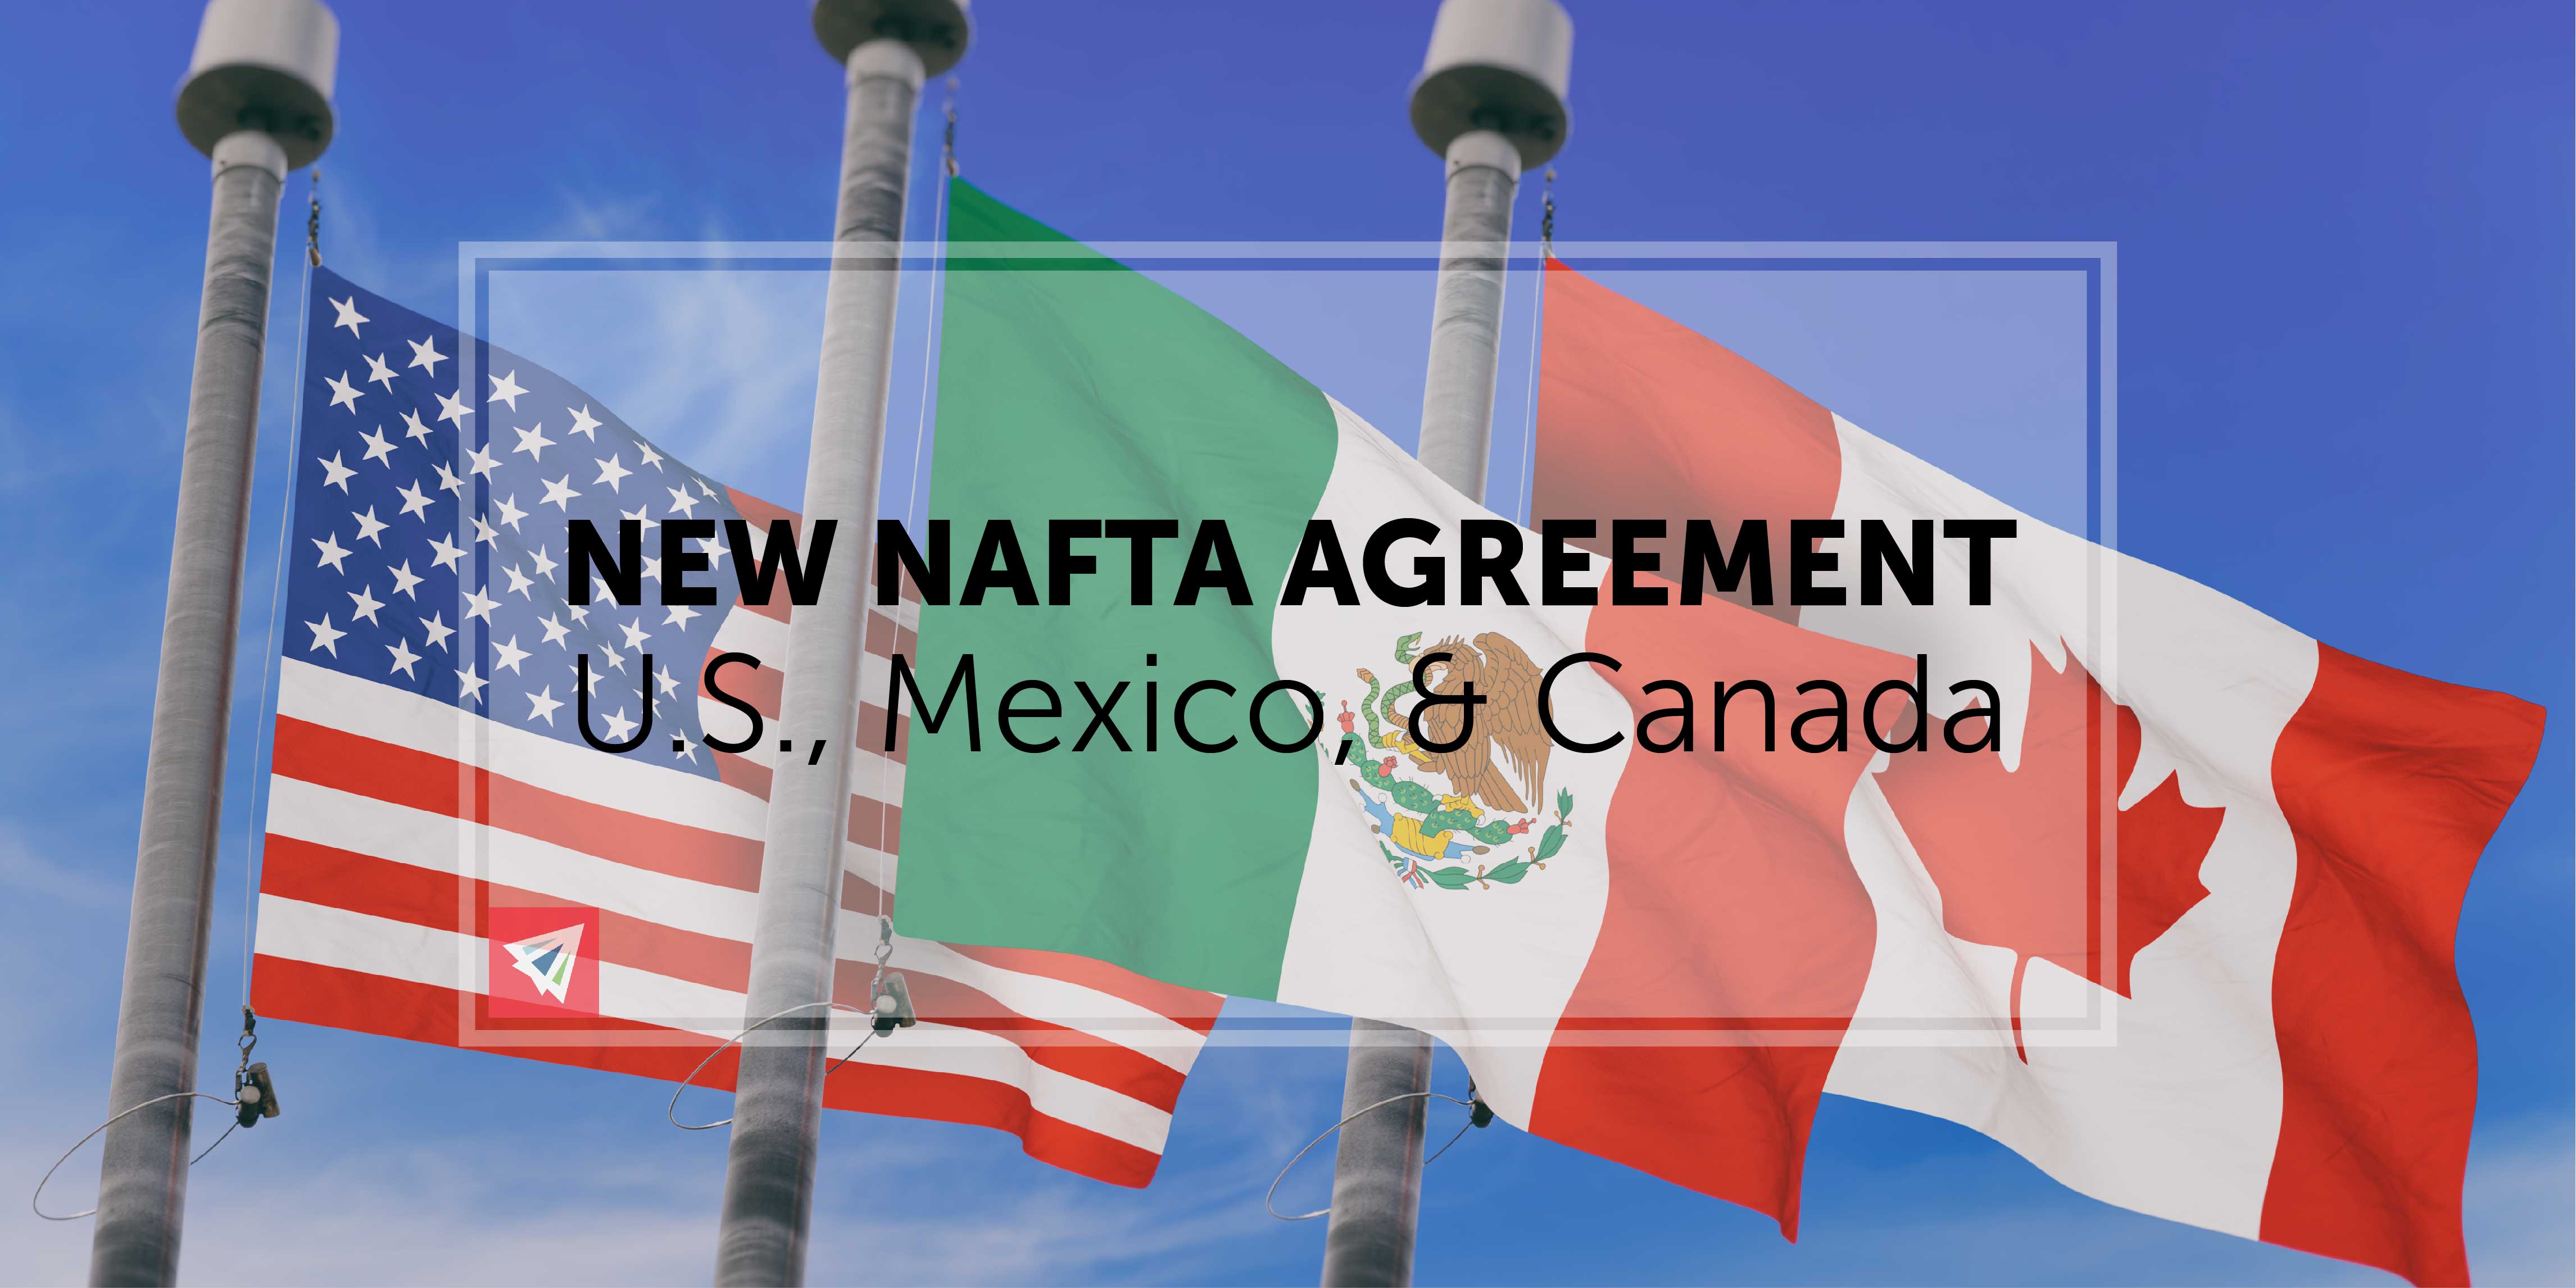 New NAFTA Agreement - U.S., Mexico, and Canada